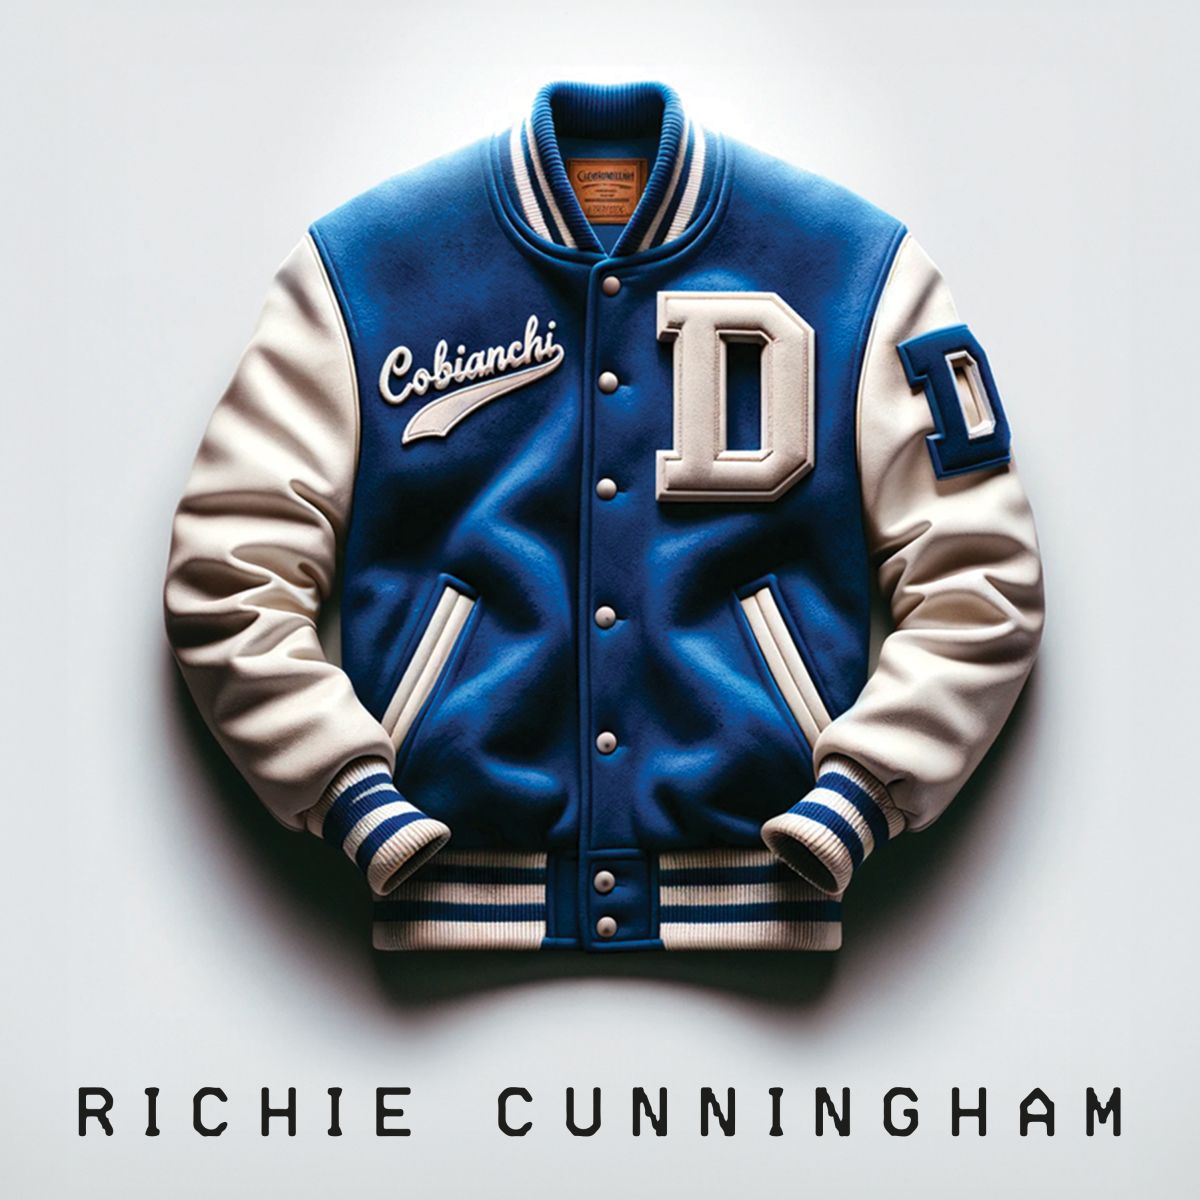 Da venerdì 24 maggio disponibile in radio e in digitale “Richie Cunningham”, brano di Daniele Cobianchi